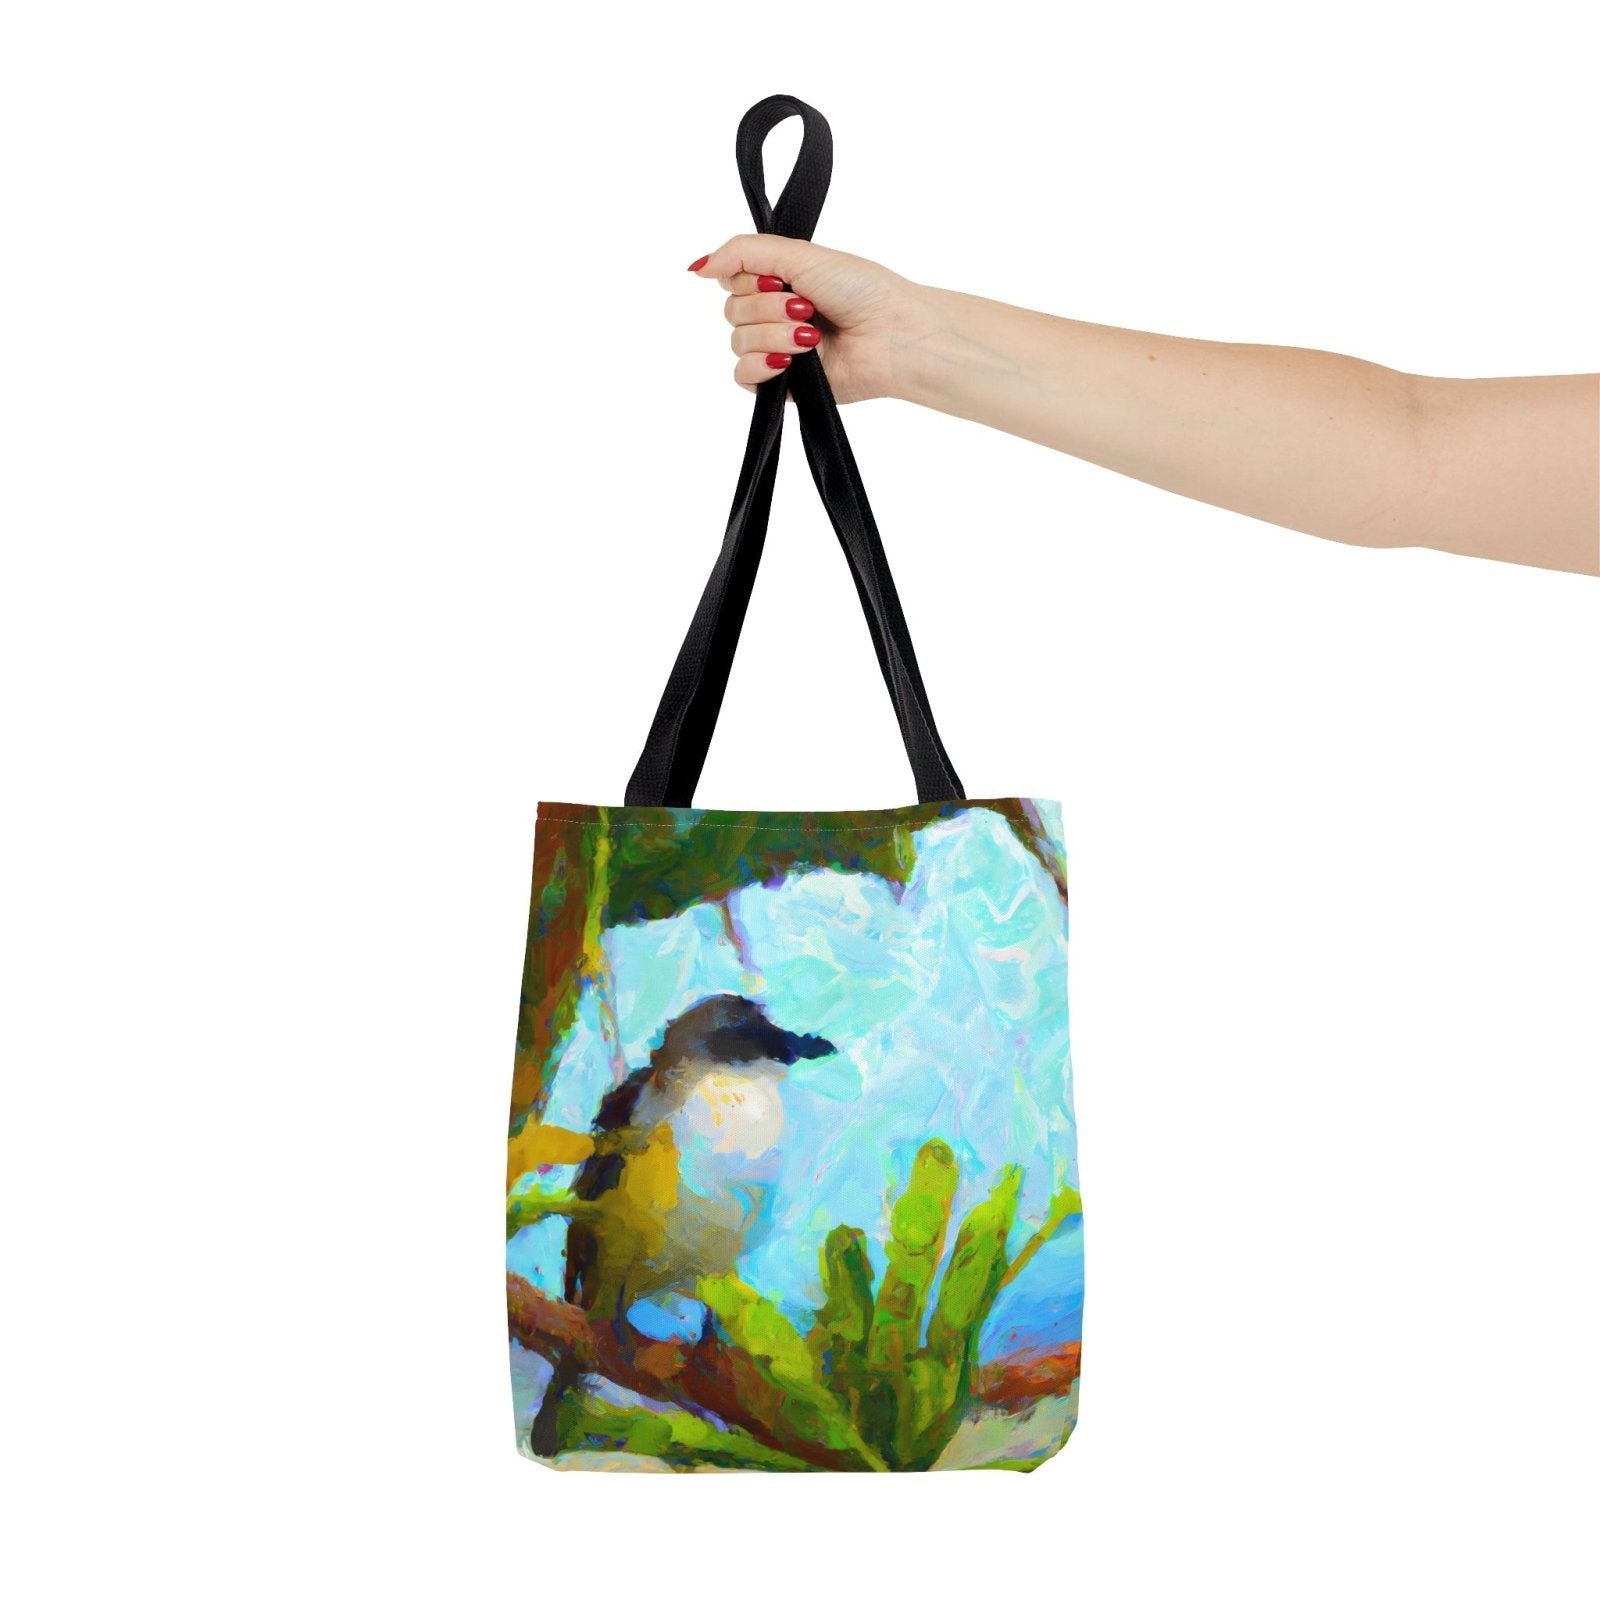 Tropical Bird Tote Bag, birdwatching accessories, bird inspired fashion - Subtle Blue M